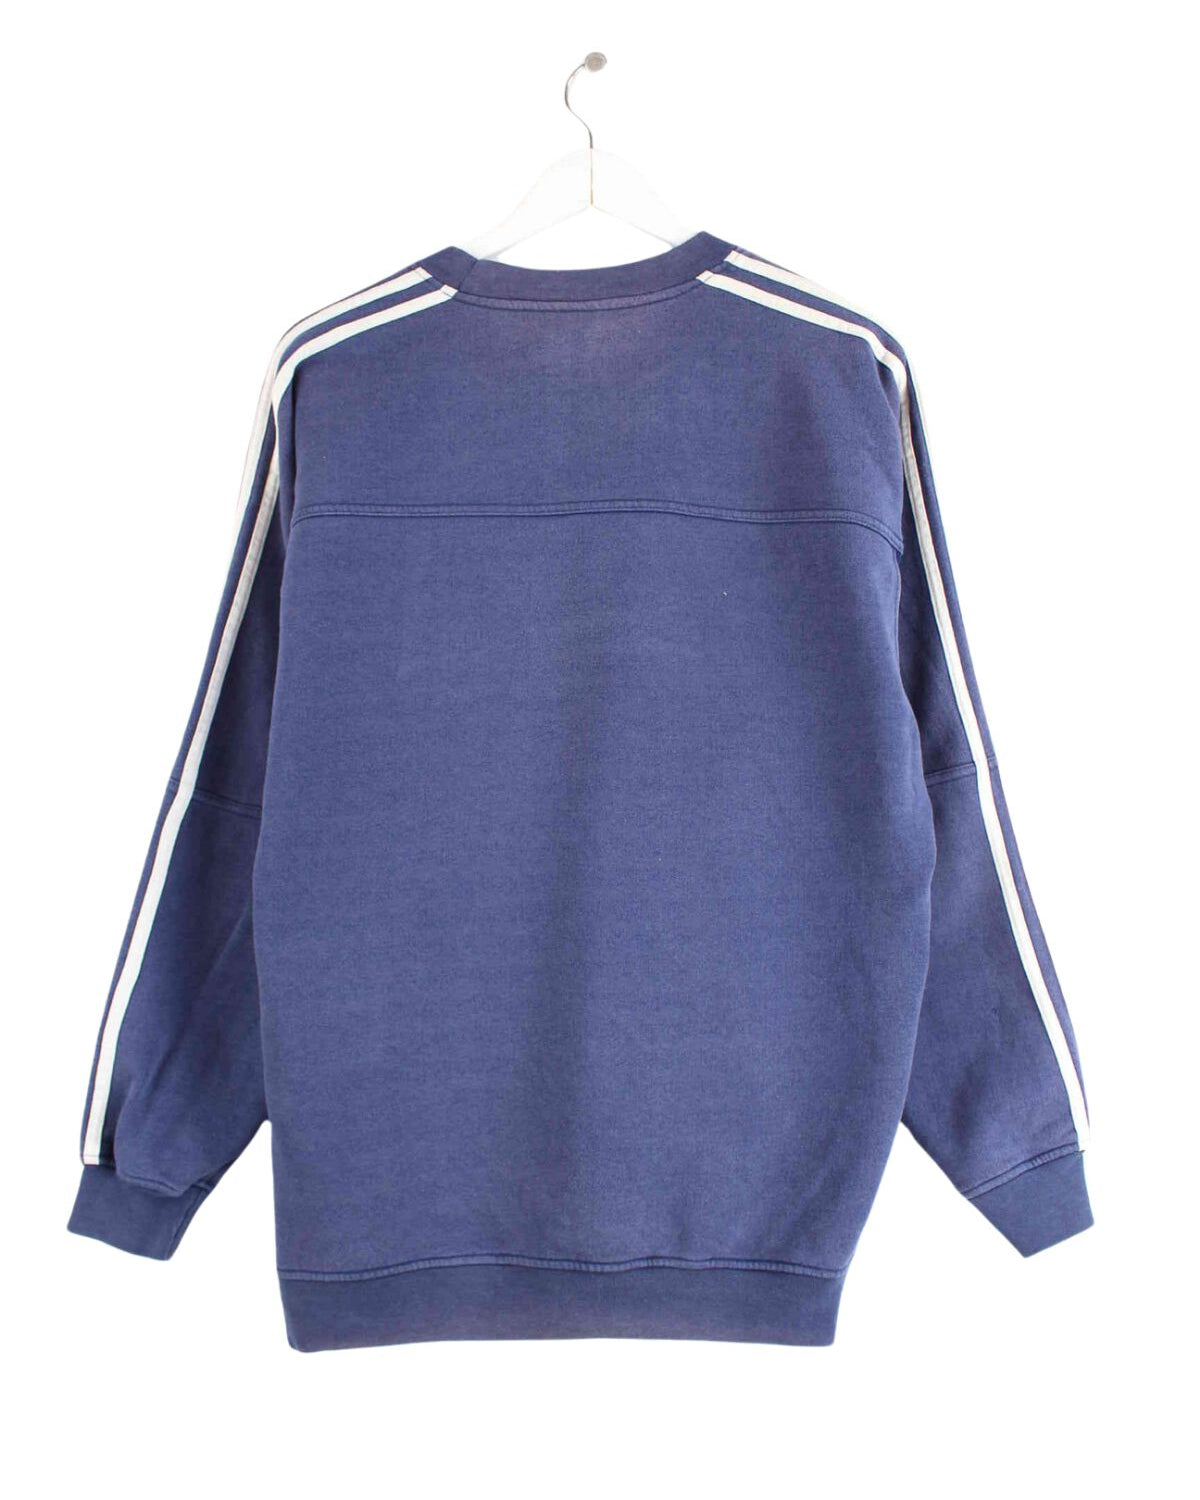 Adidas 90s Vintage 3-Stripes Sweater Blau L (back image)